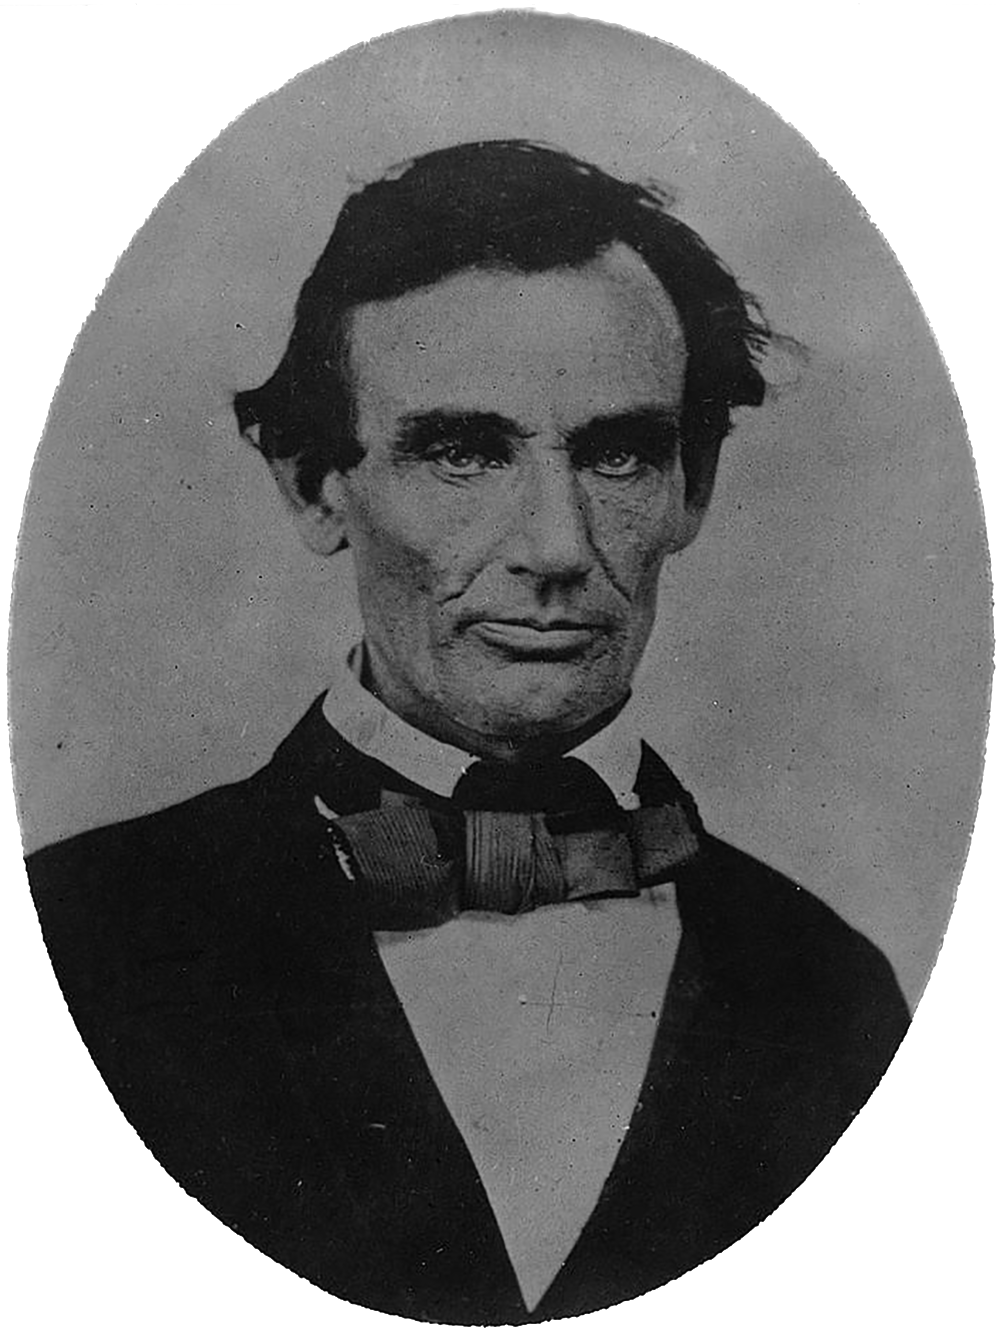 Historic Portraitof Abraham Lincoln